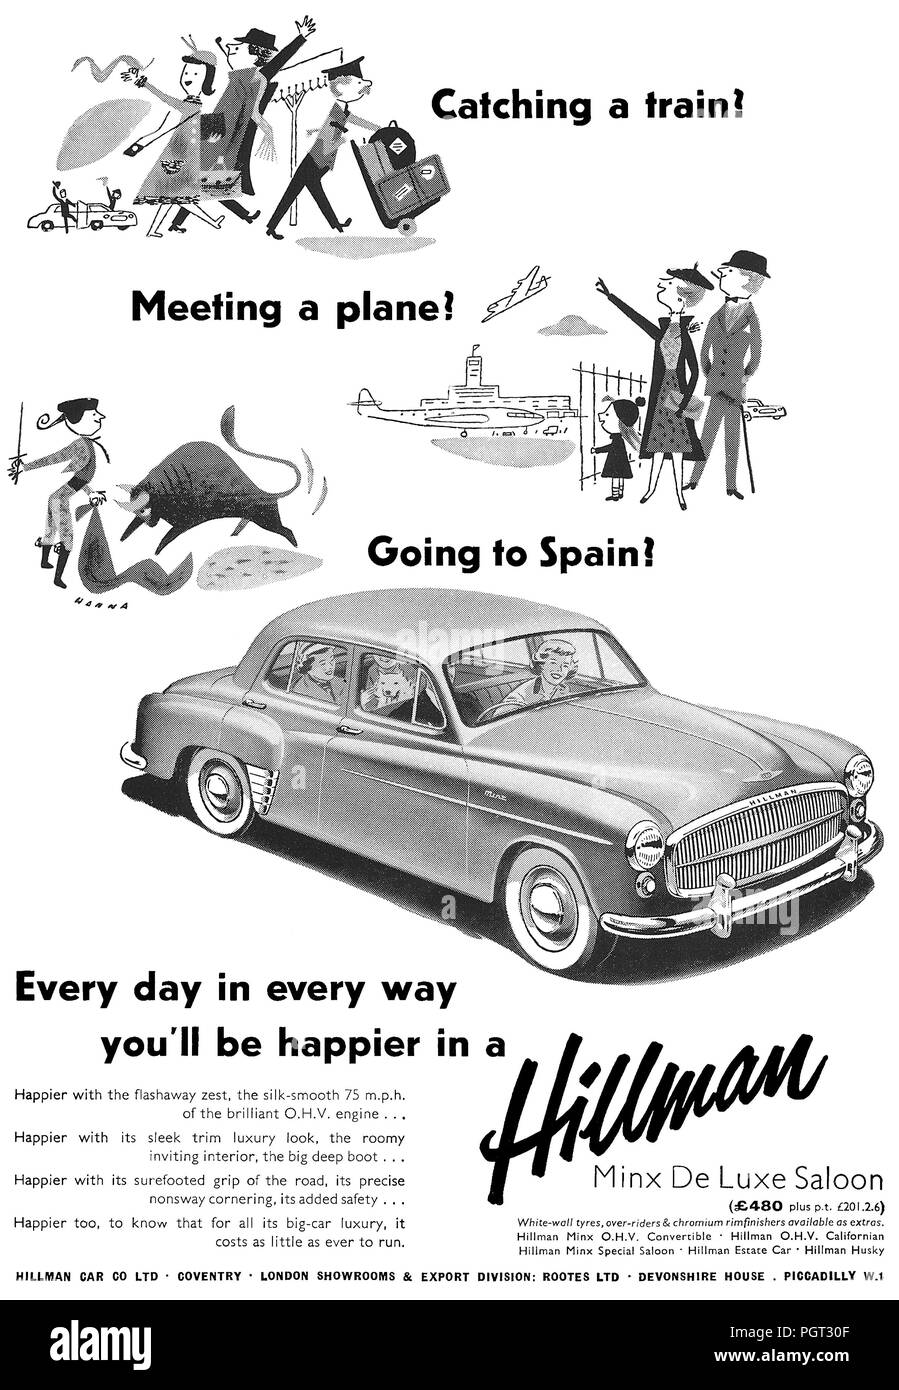 1955 British advertisement for the Hillman Minx De Luxe Saloon motor car. Stock Photo